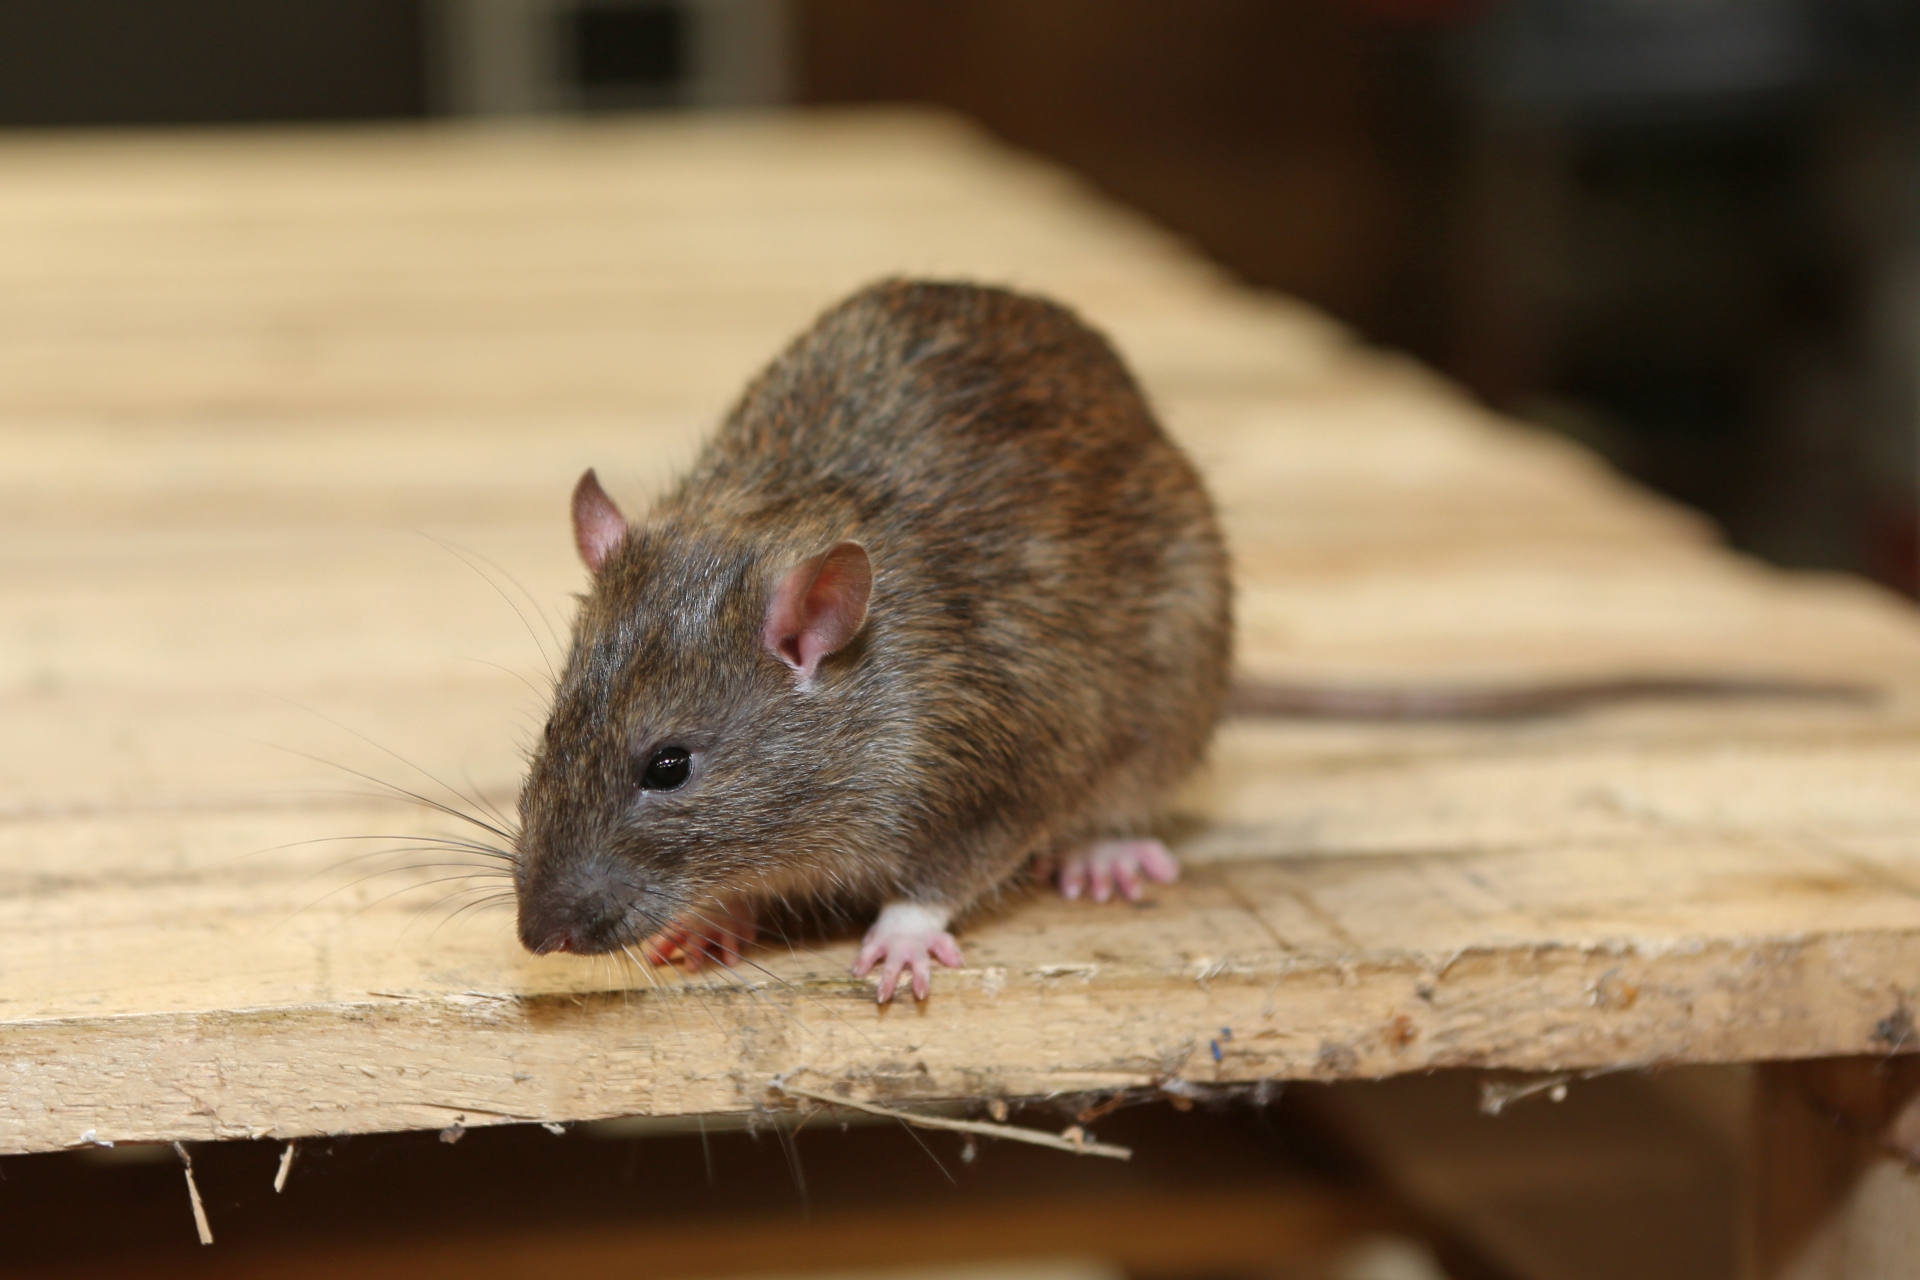 Rat extermination, Pest Control in Barnes, Castelnau, SW13. Call Now 020 8166 9746